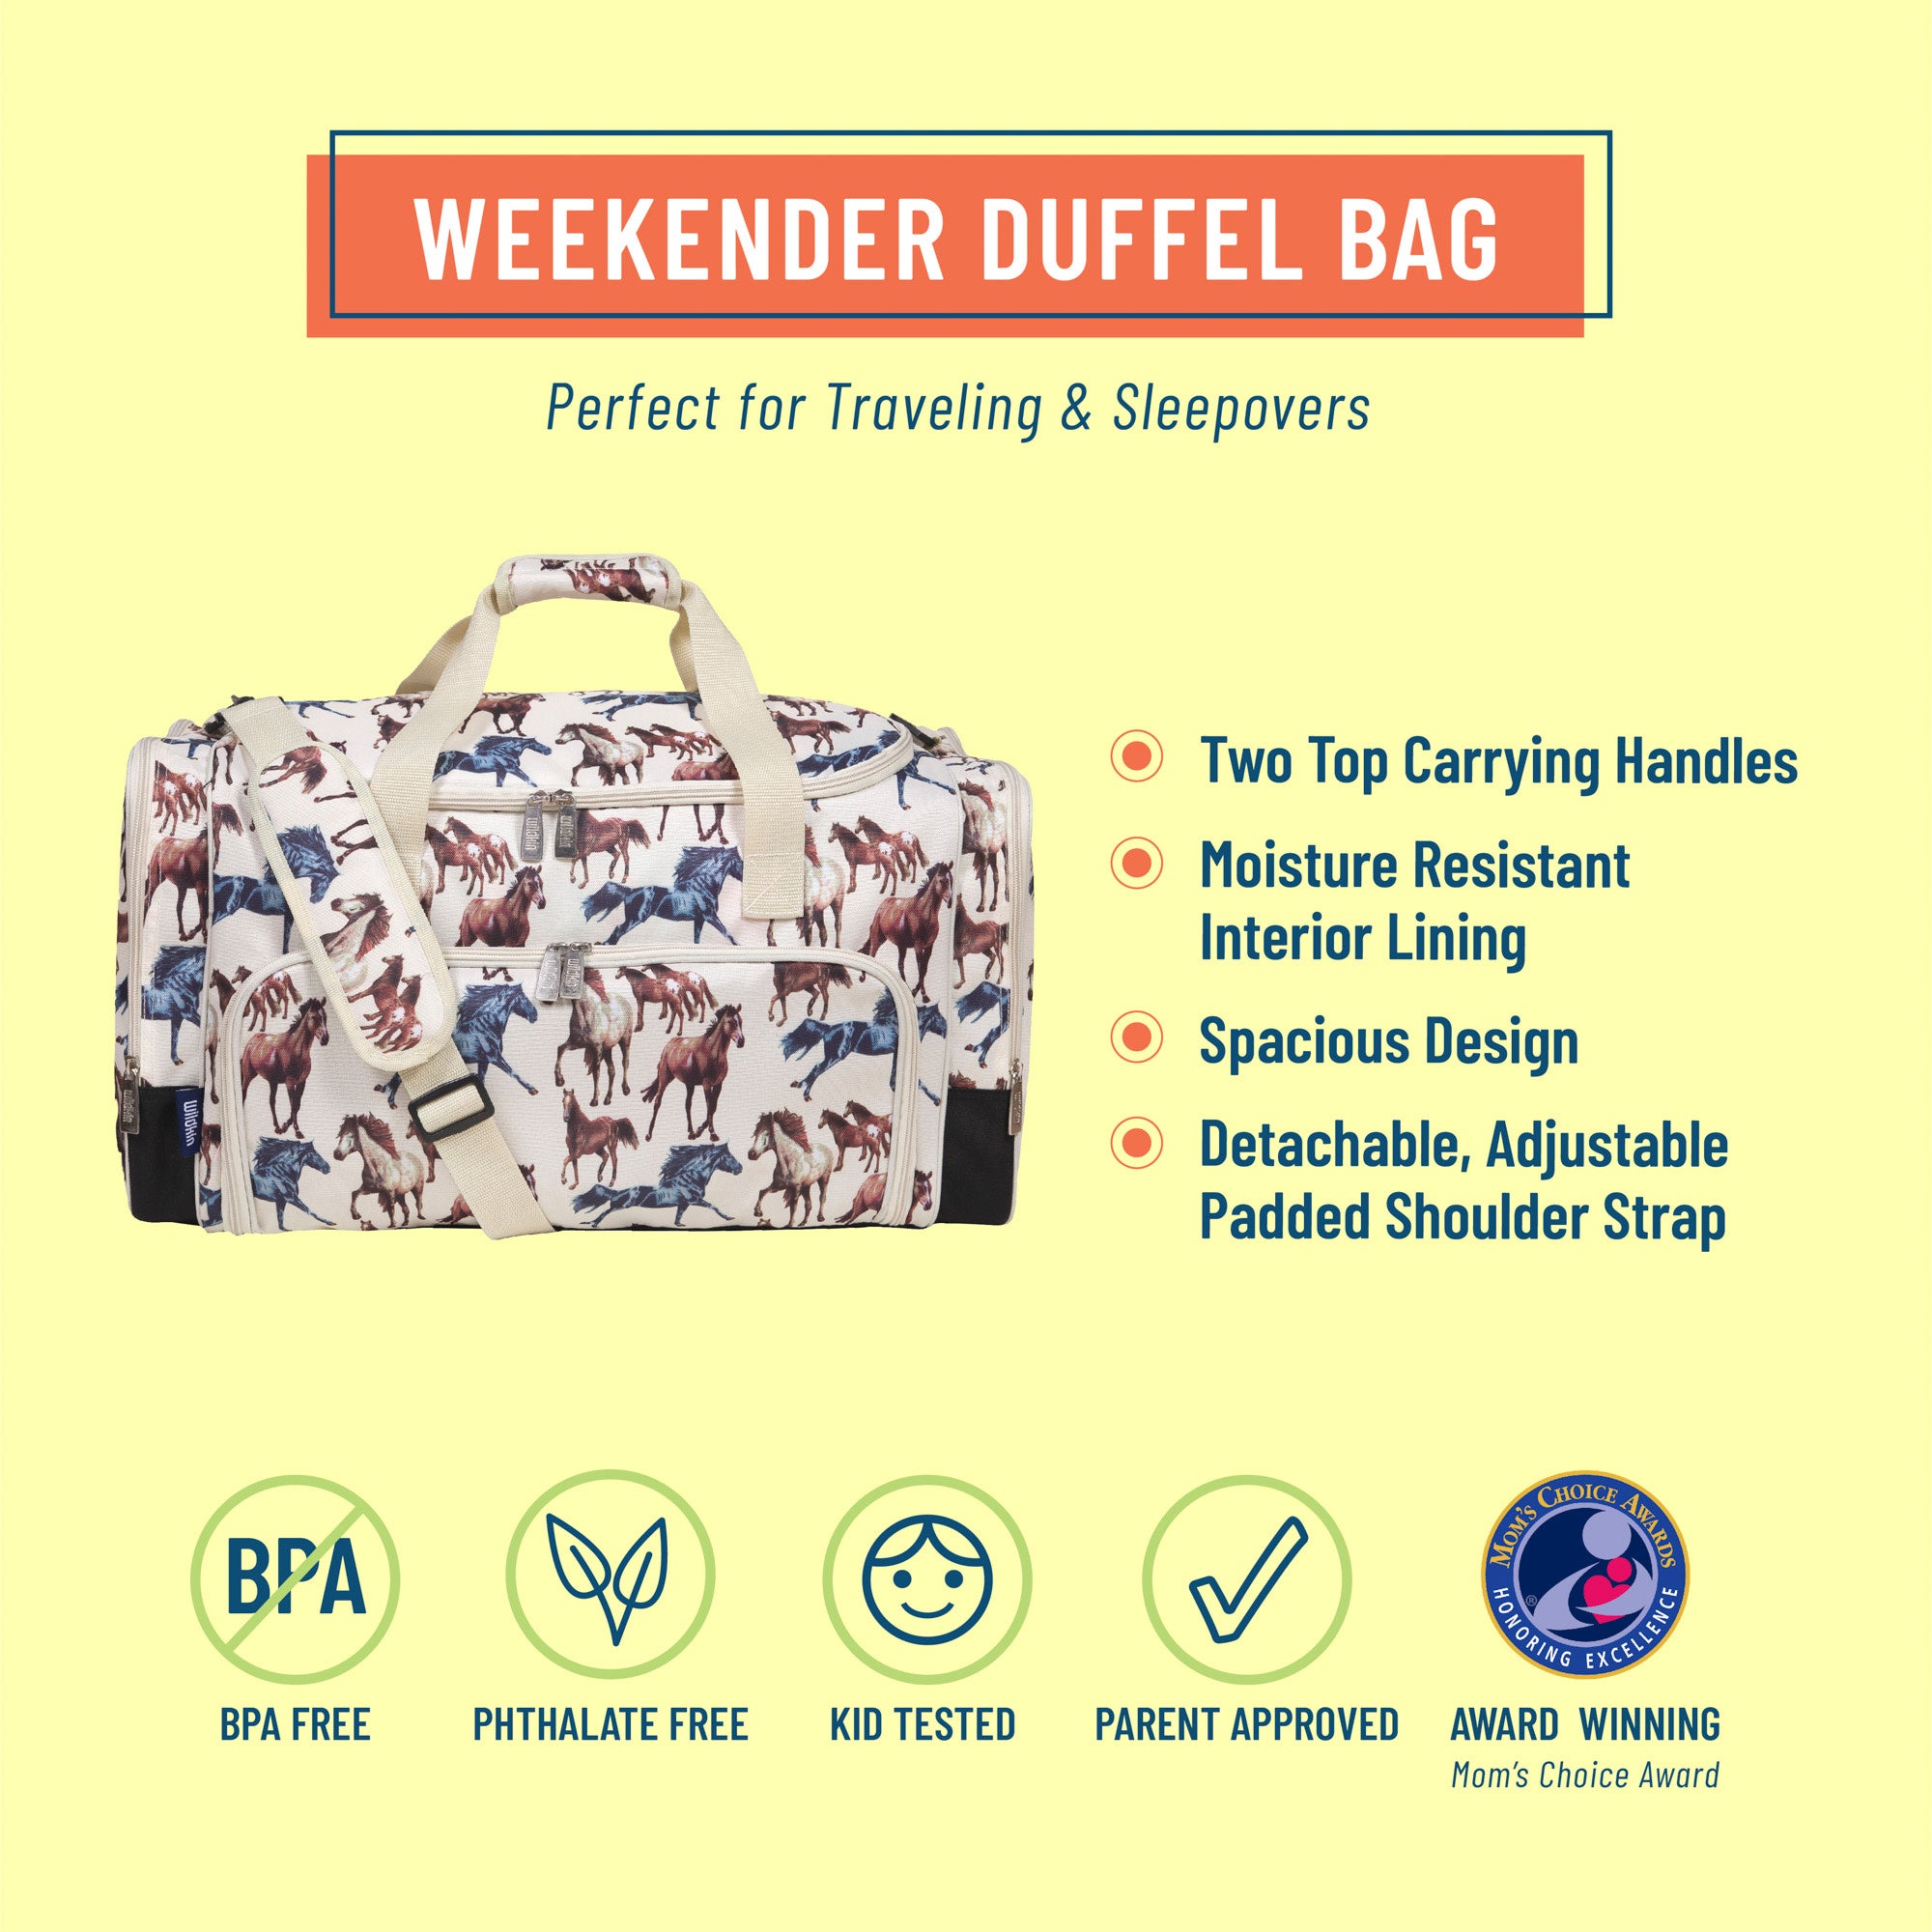 Wildkin Kids Weekender Travel Duffel Bags for Boys & Girls (Horse Dreams)